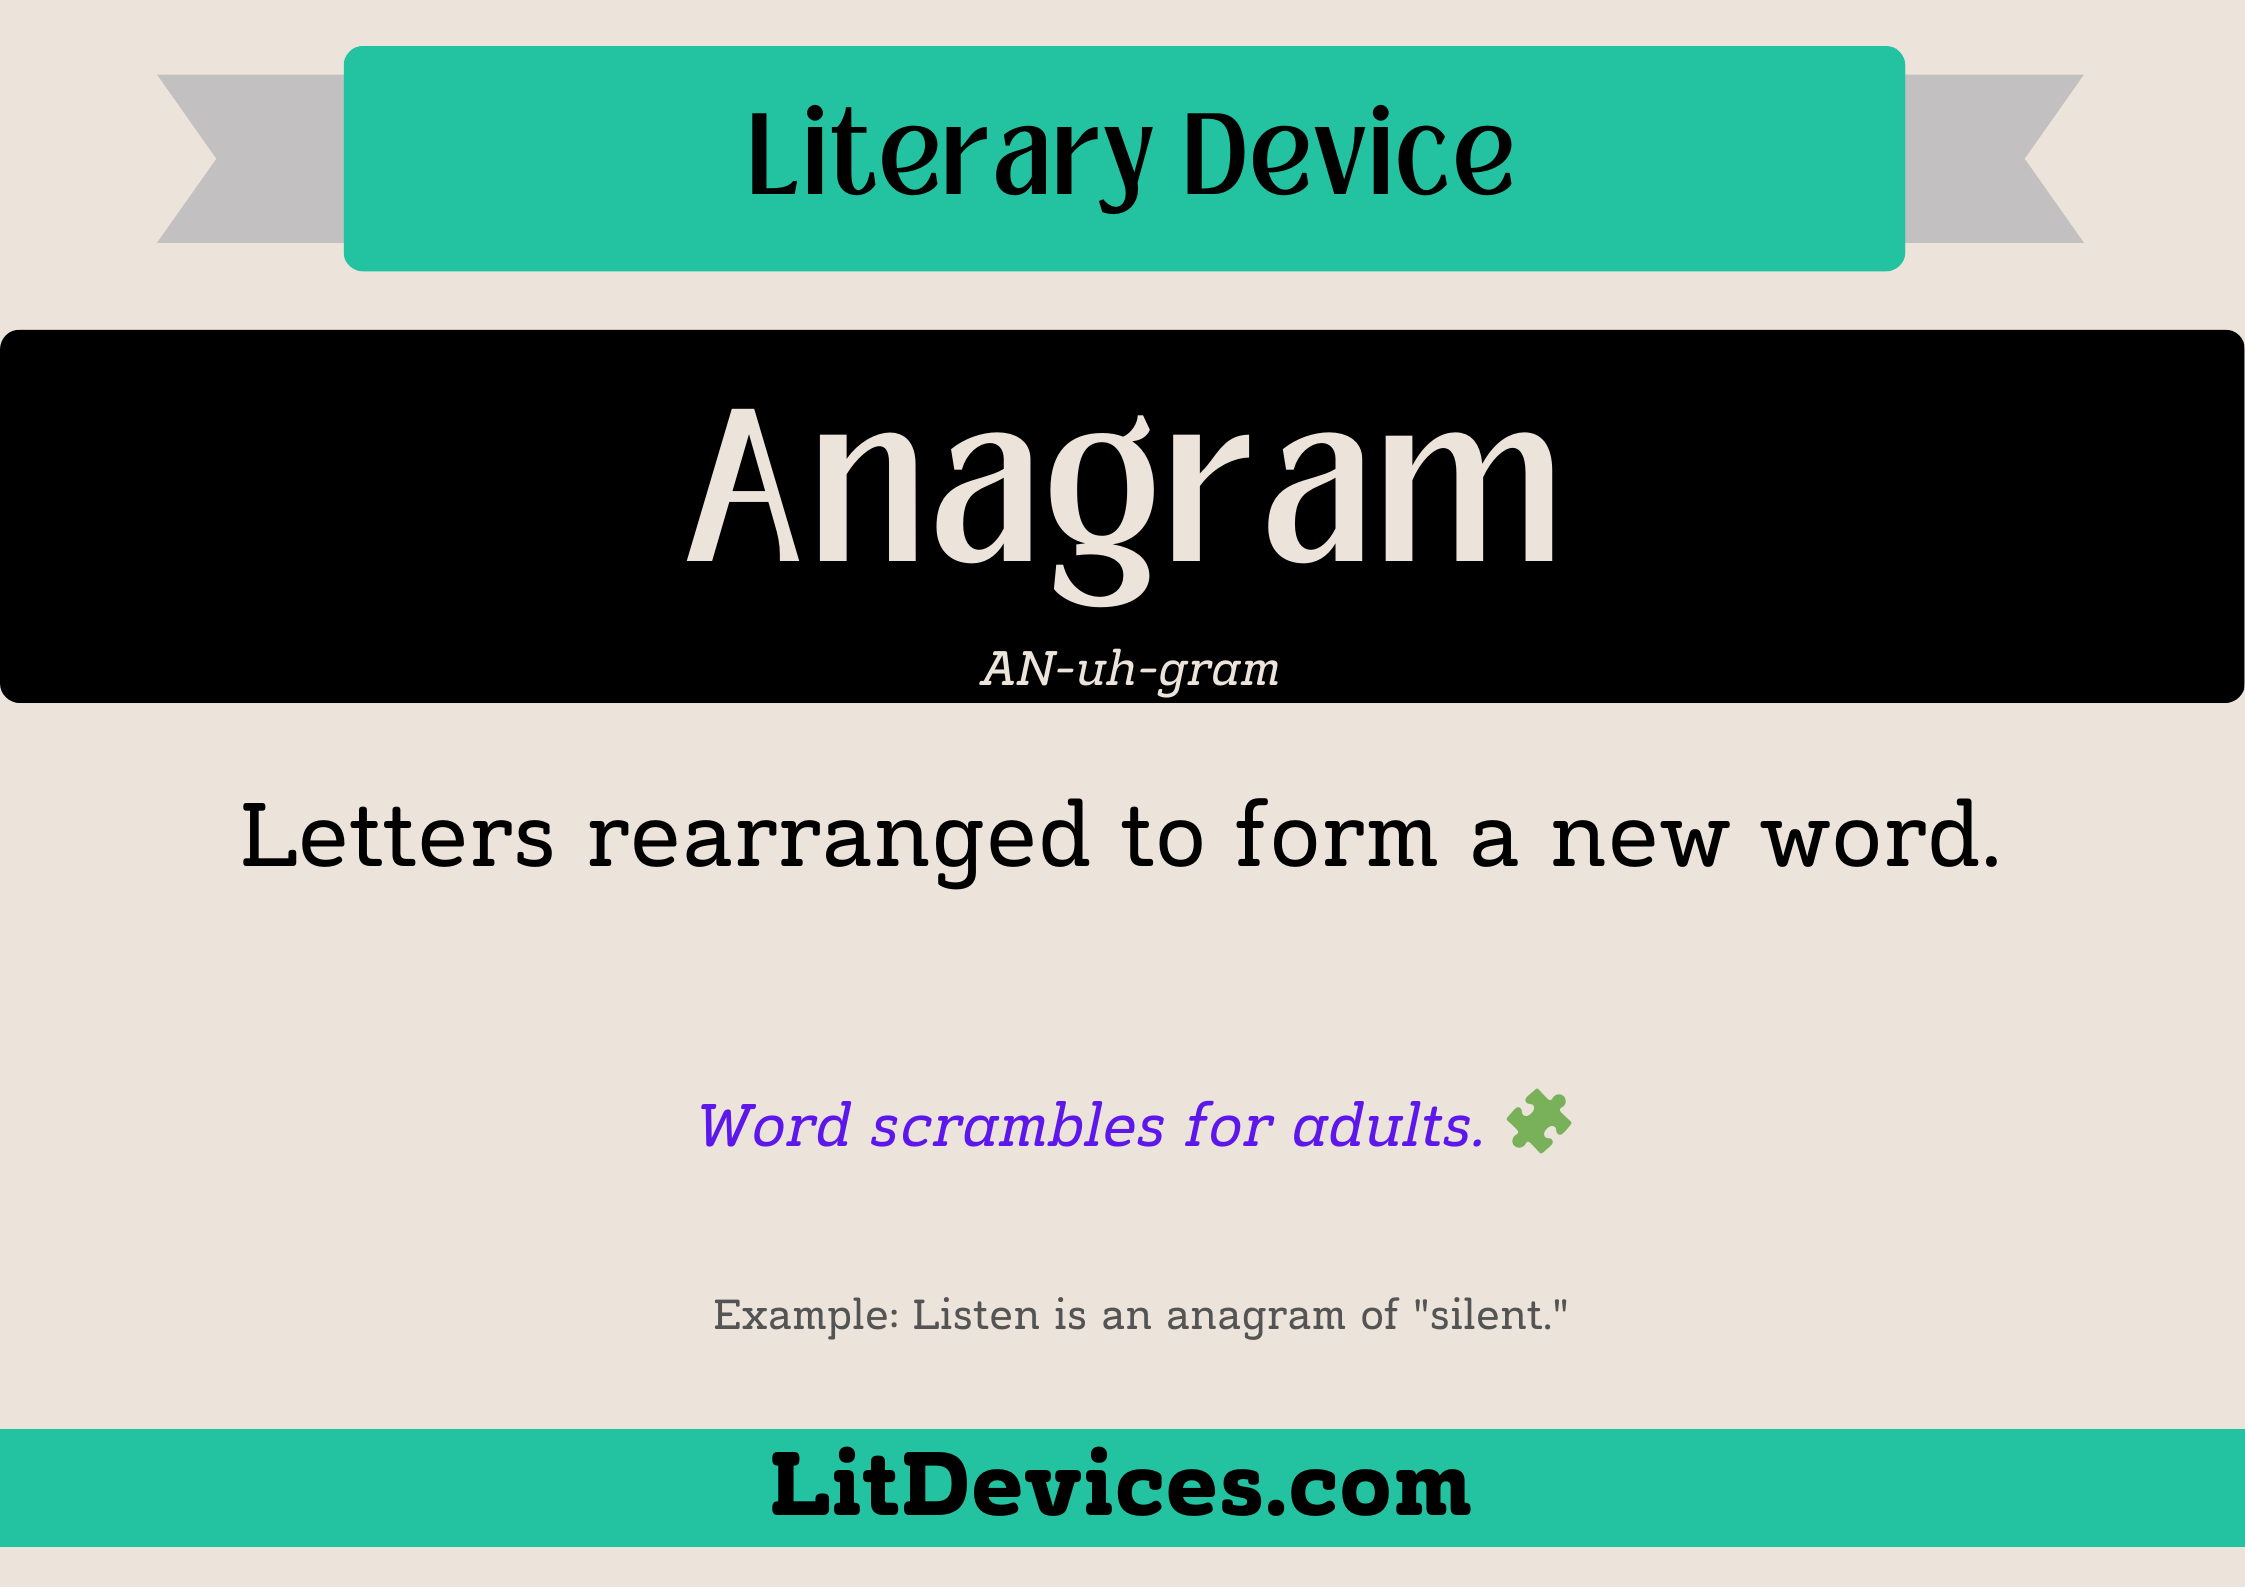 anagram literary device